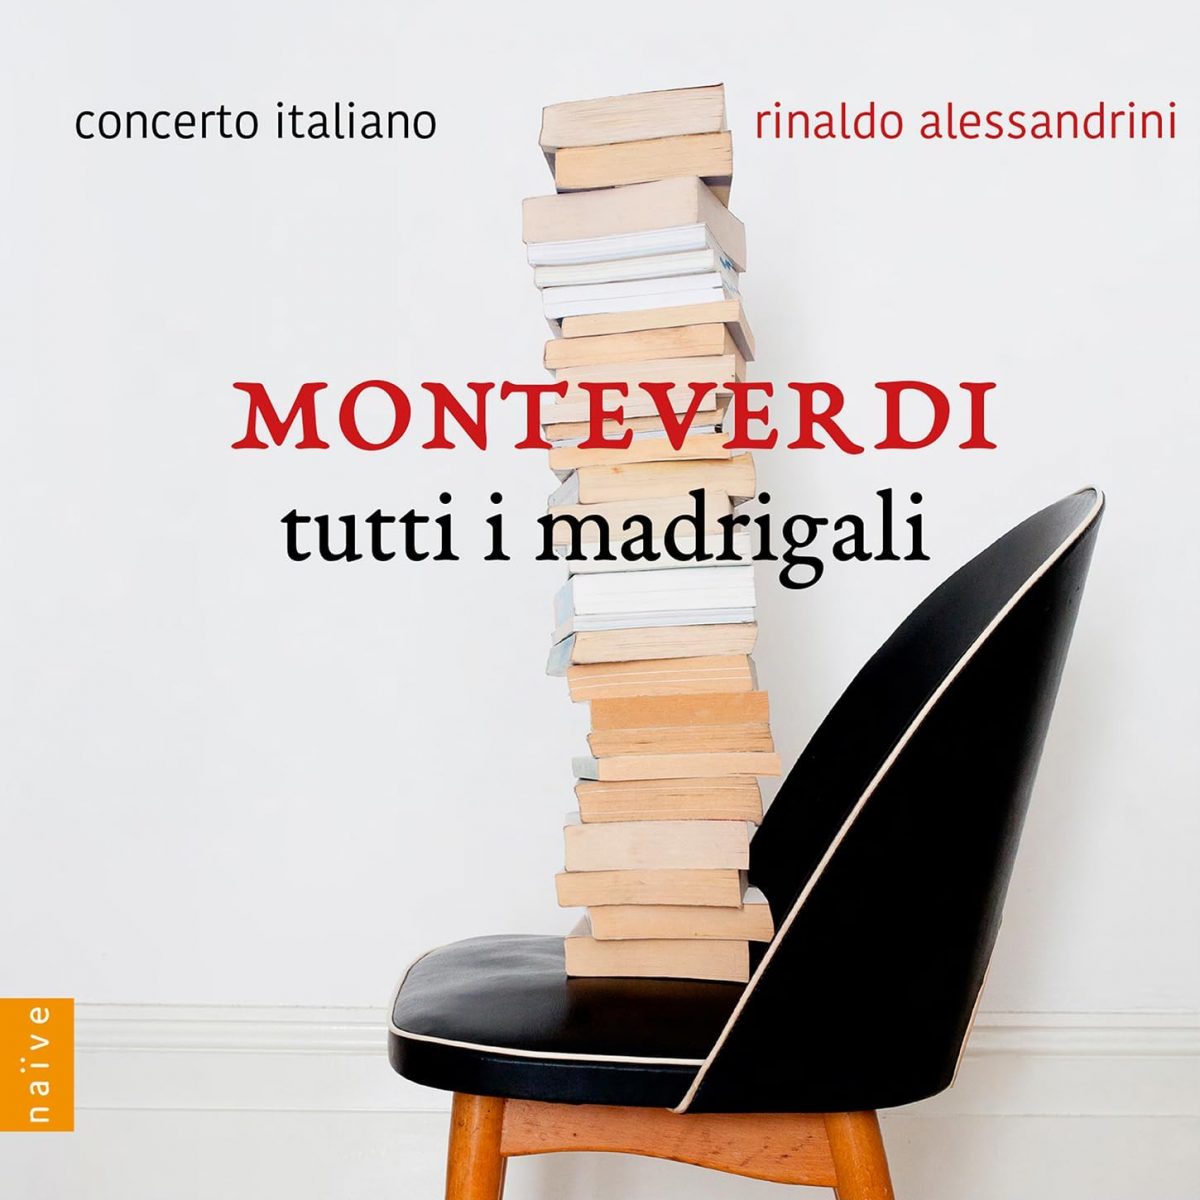 CD cover of Monteverdi tutti i madrigali